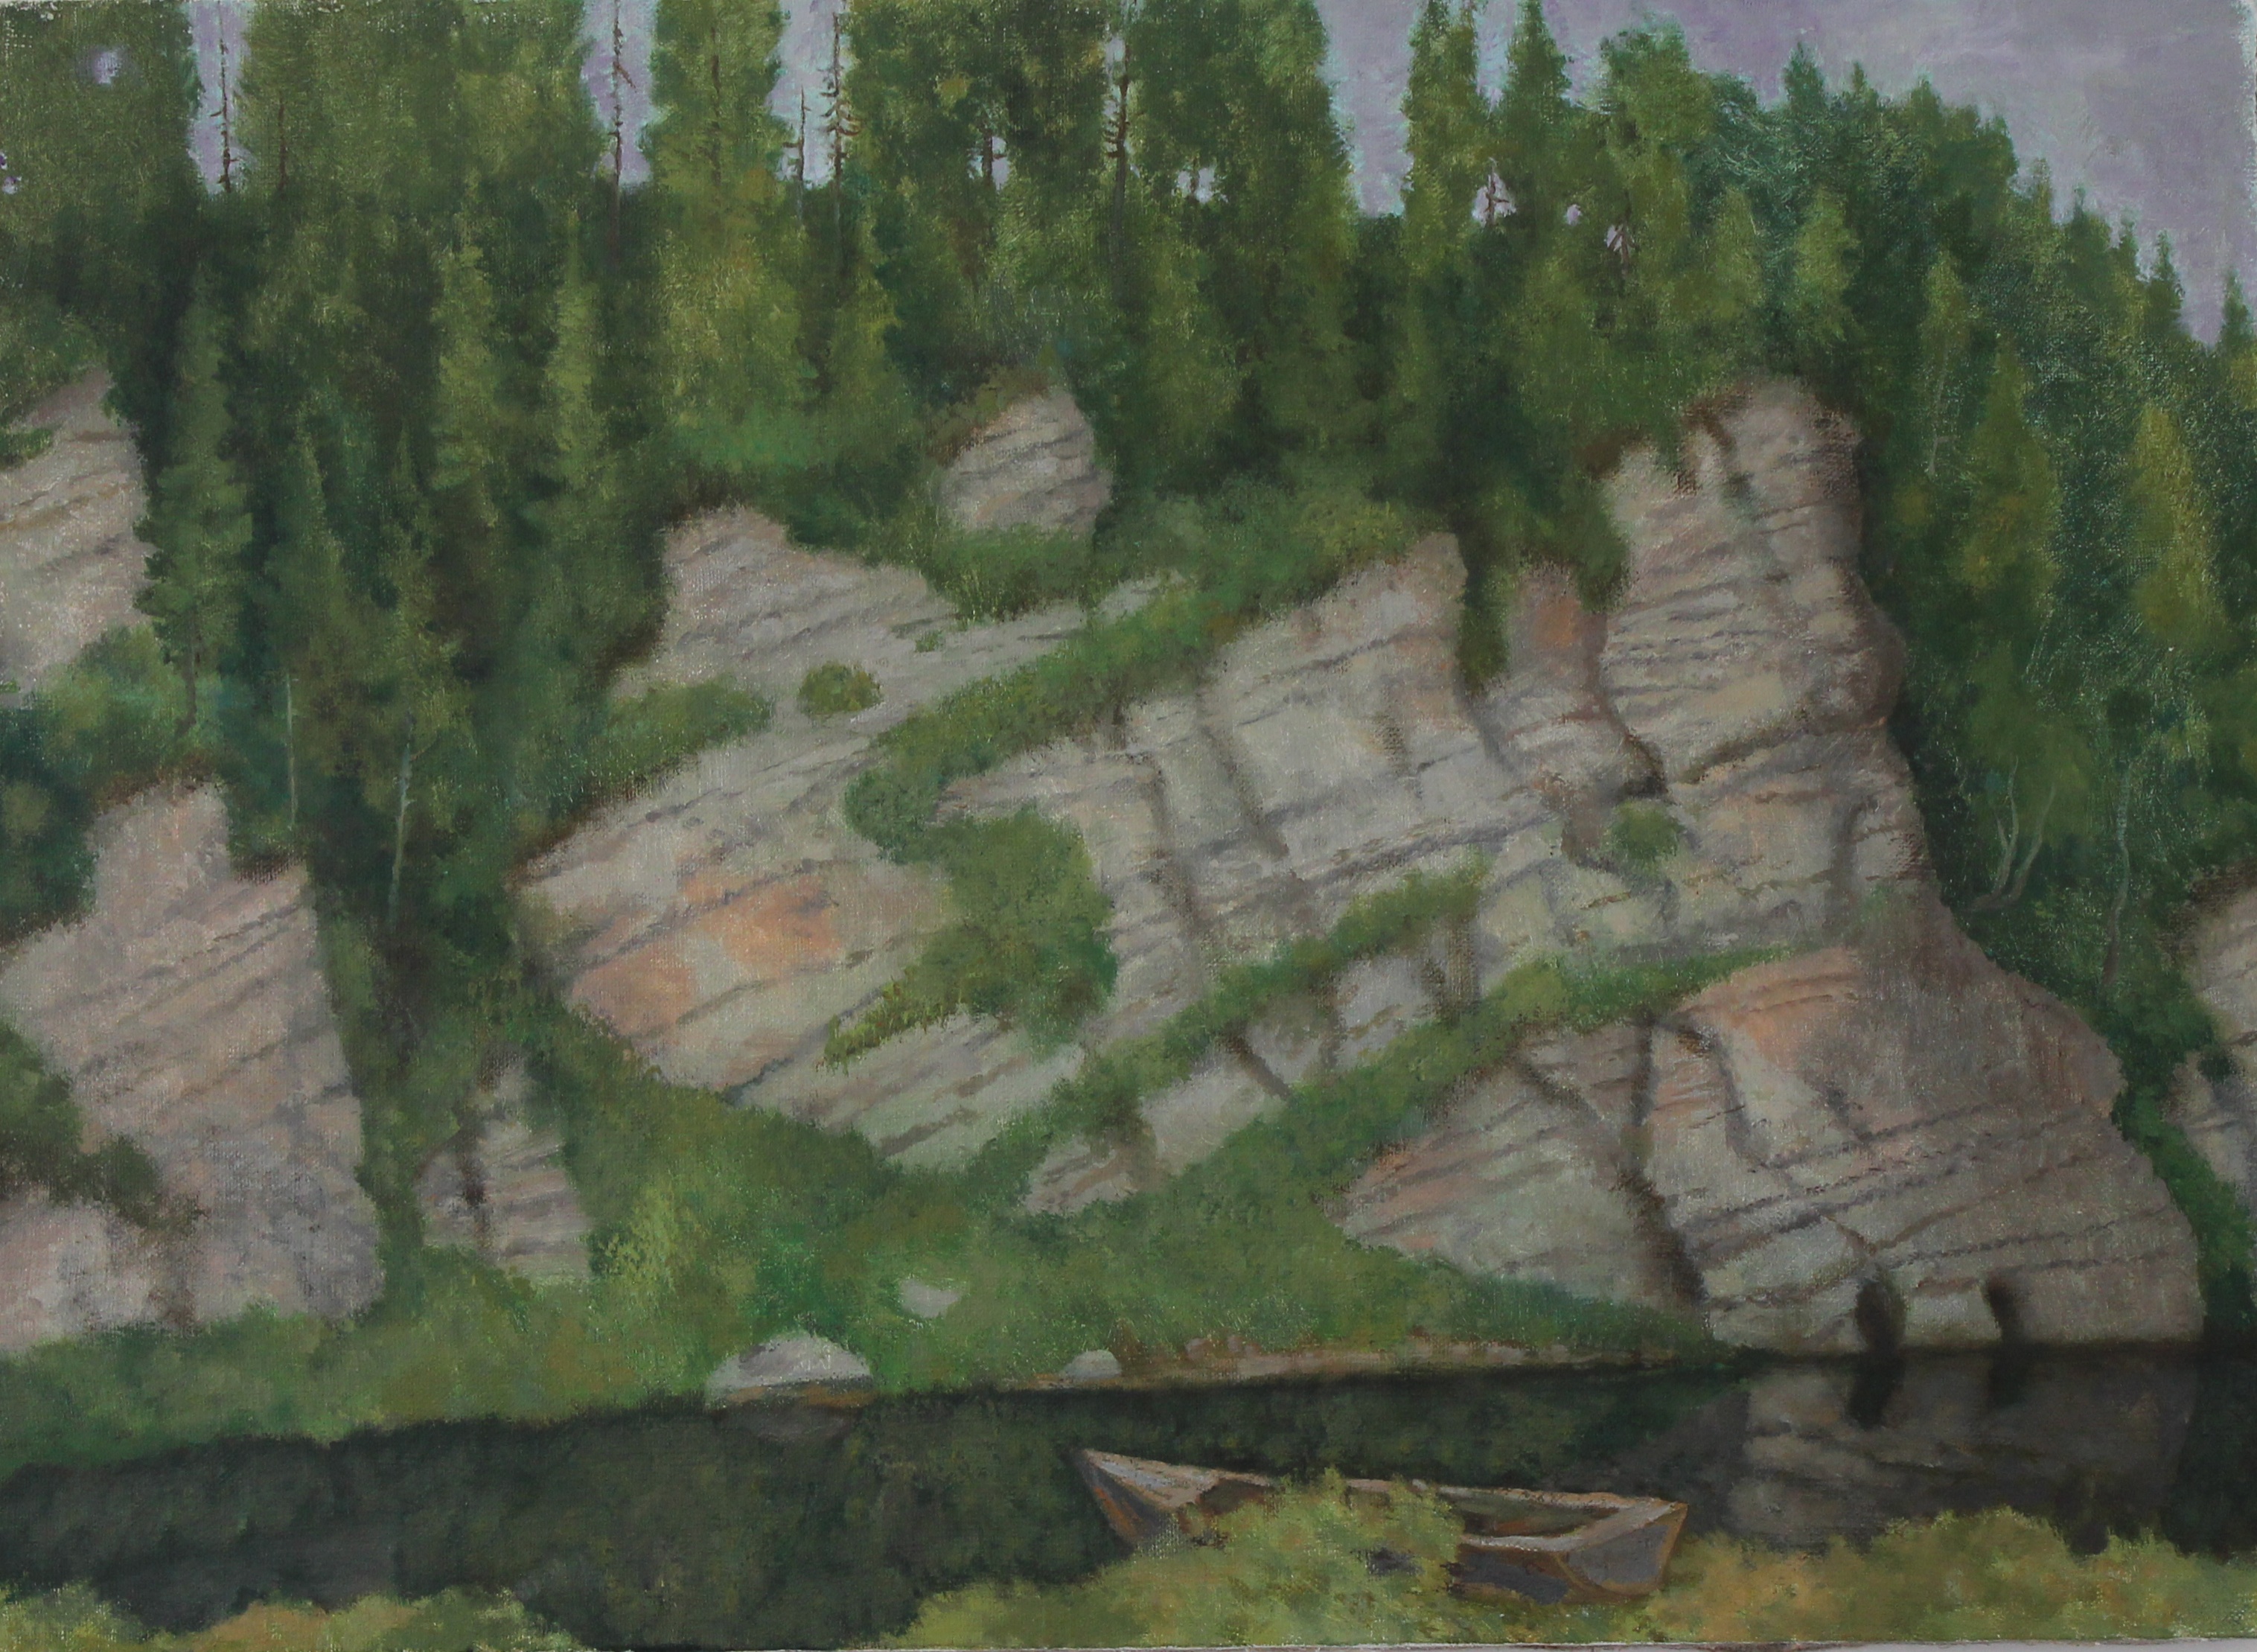 The bank of the Chusovaya River - 1, Mary Dobrovolskaya, Buy the painting Oil